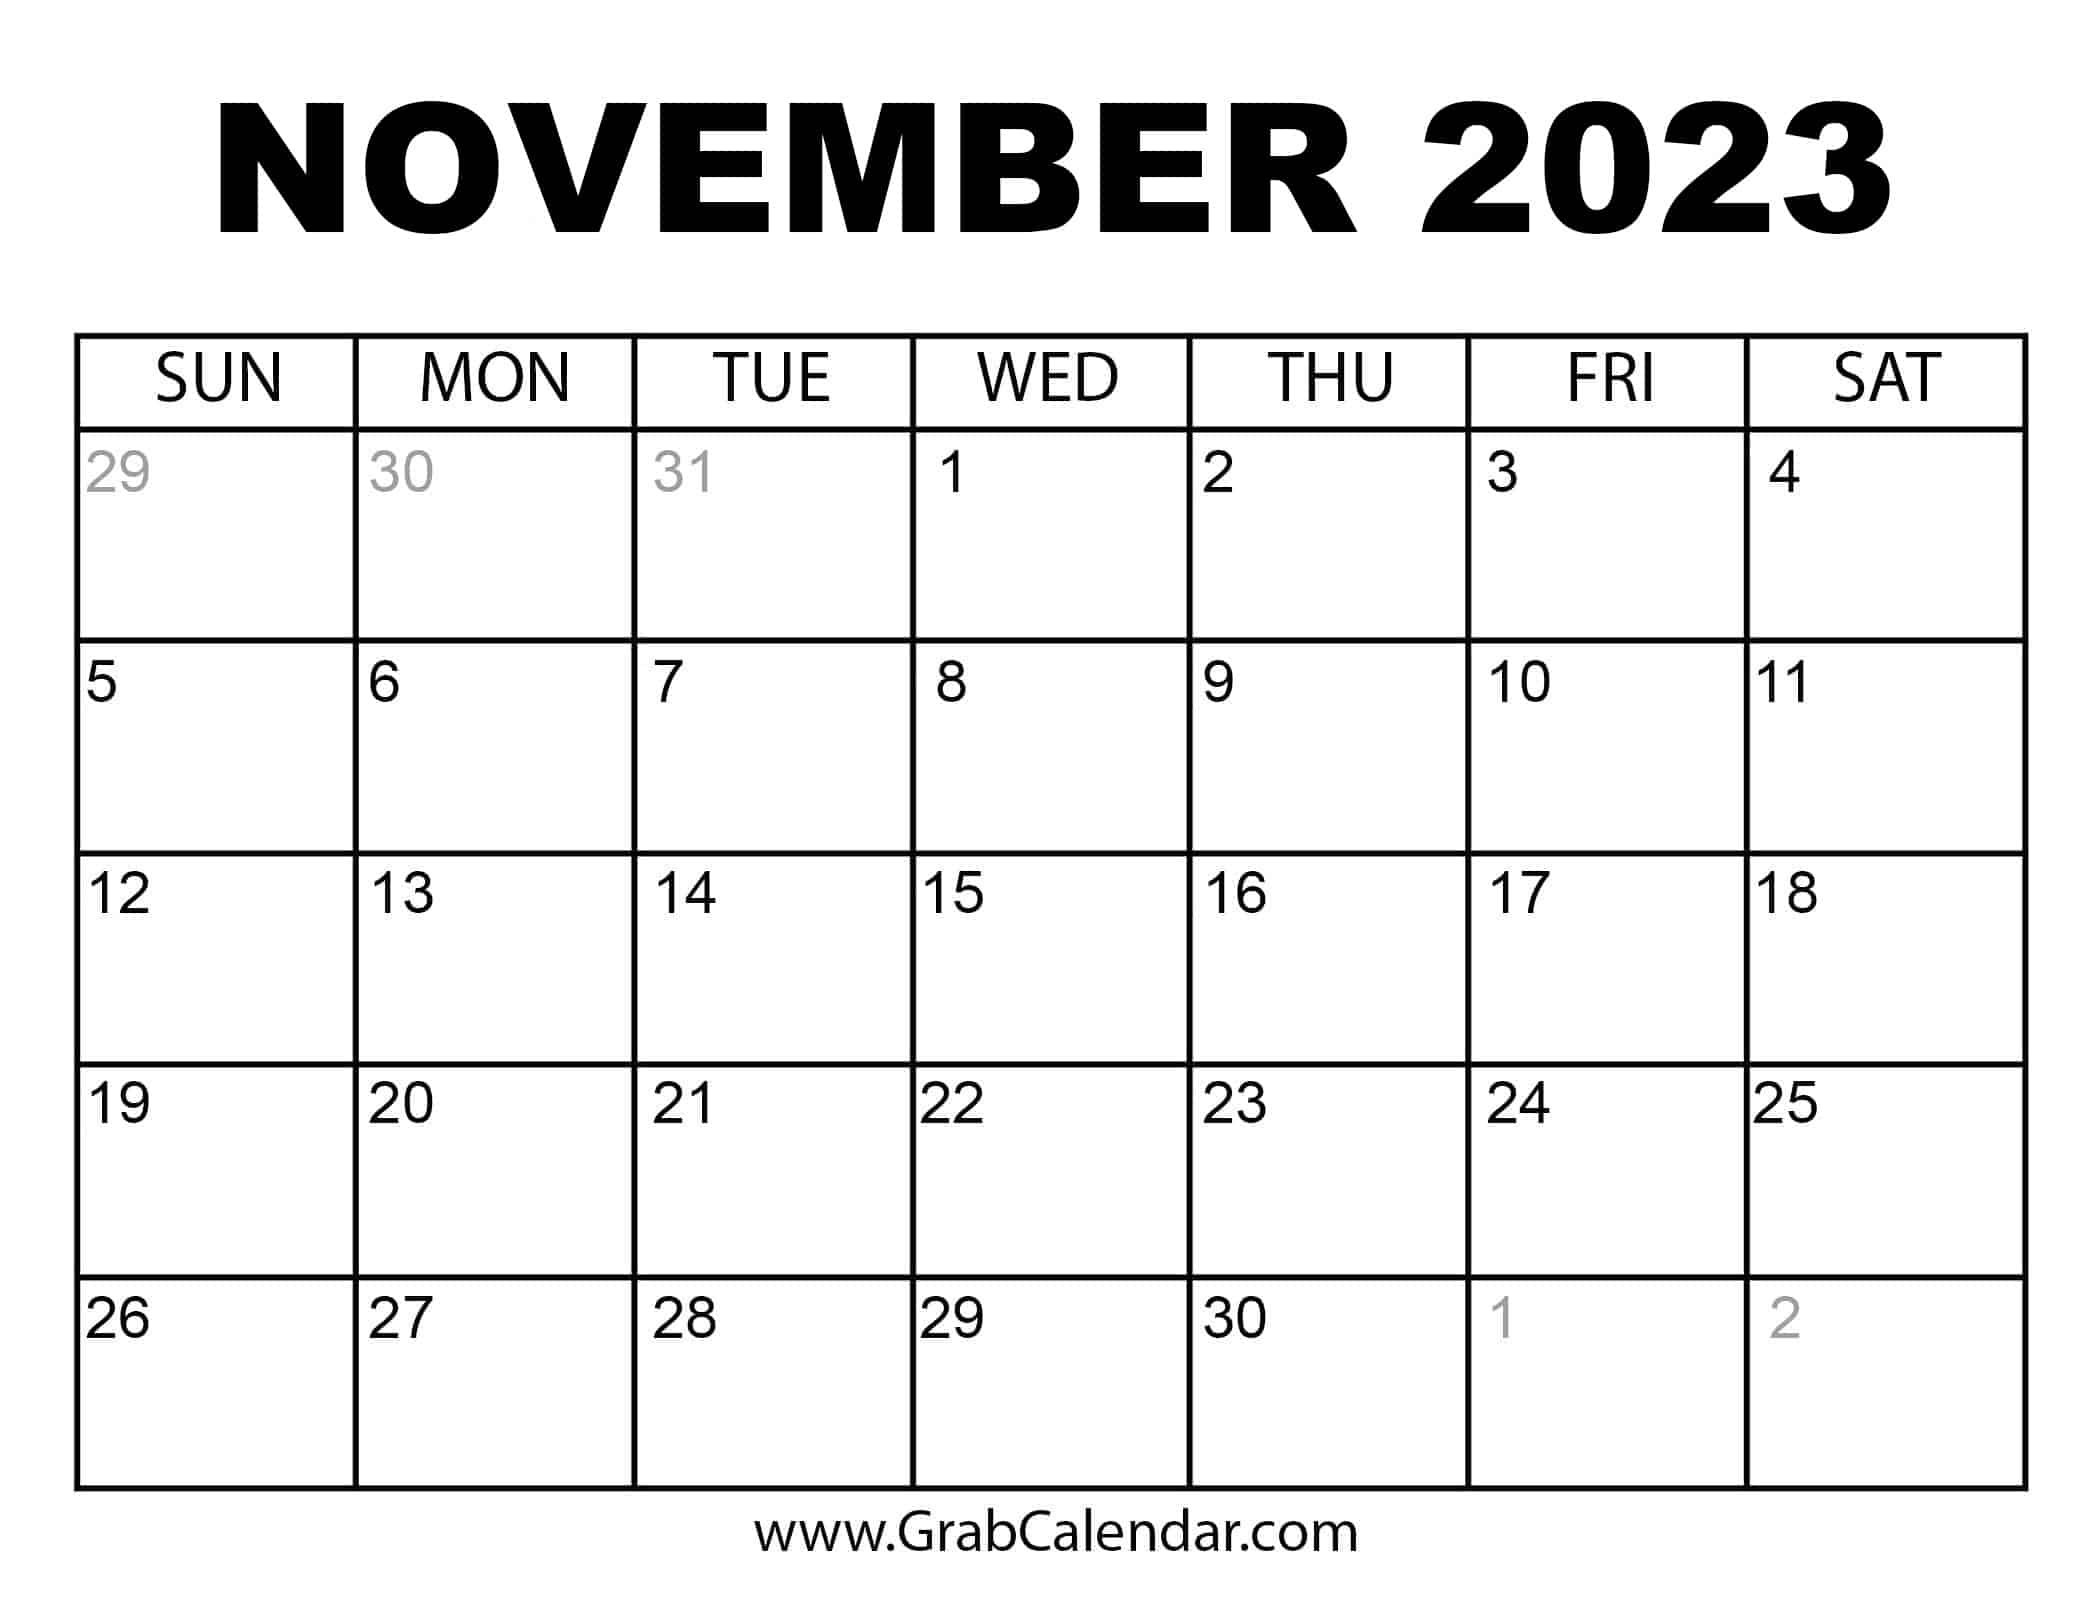 November 2023 Calendar